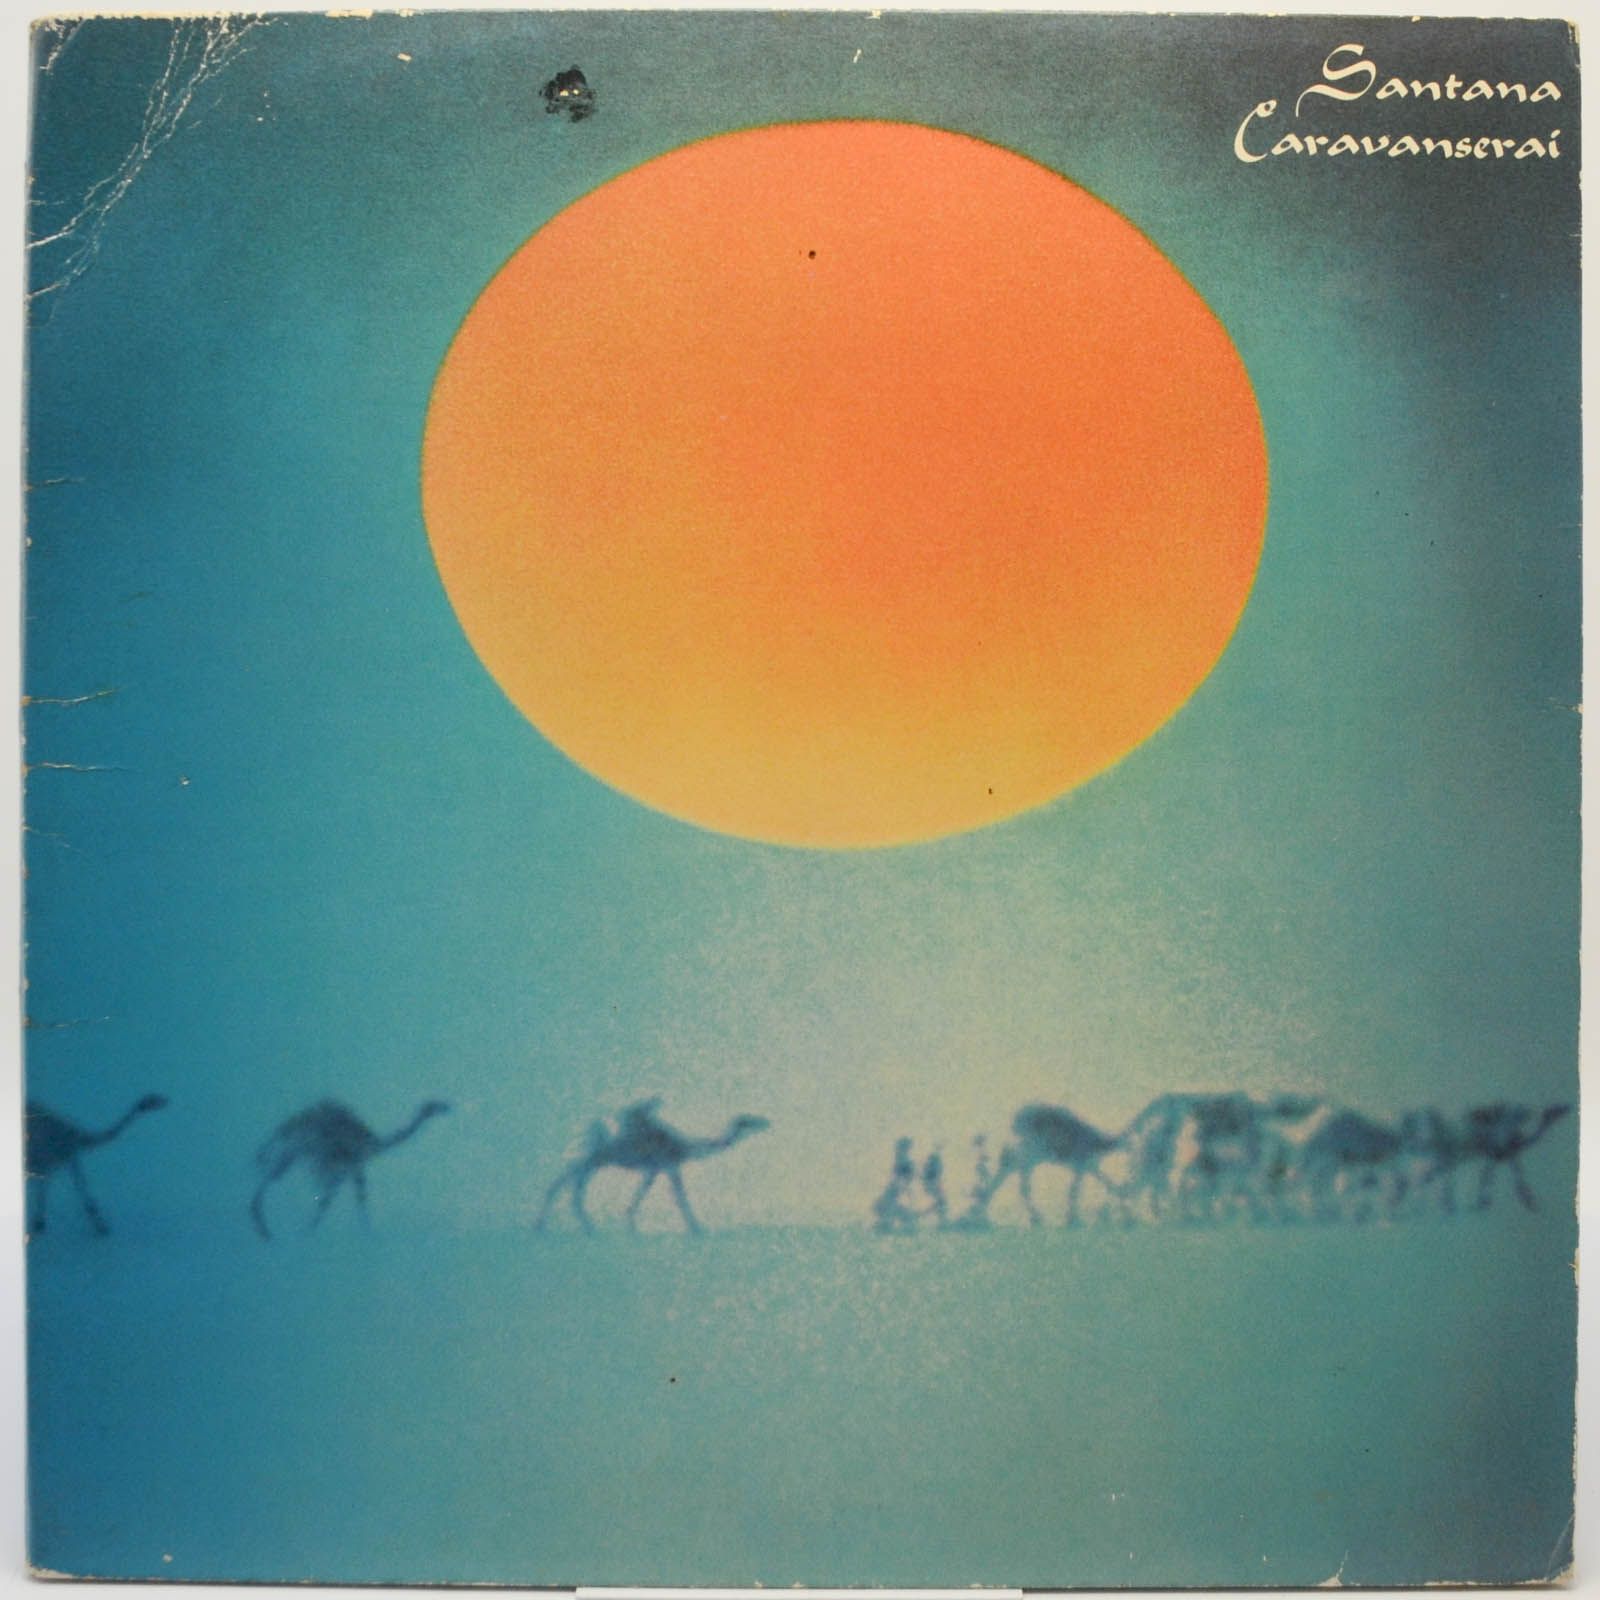 Santana — Caravanserai (USA), 1972